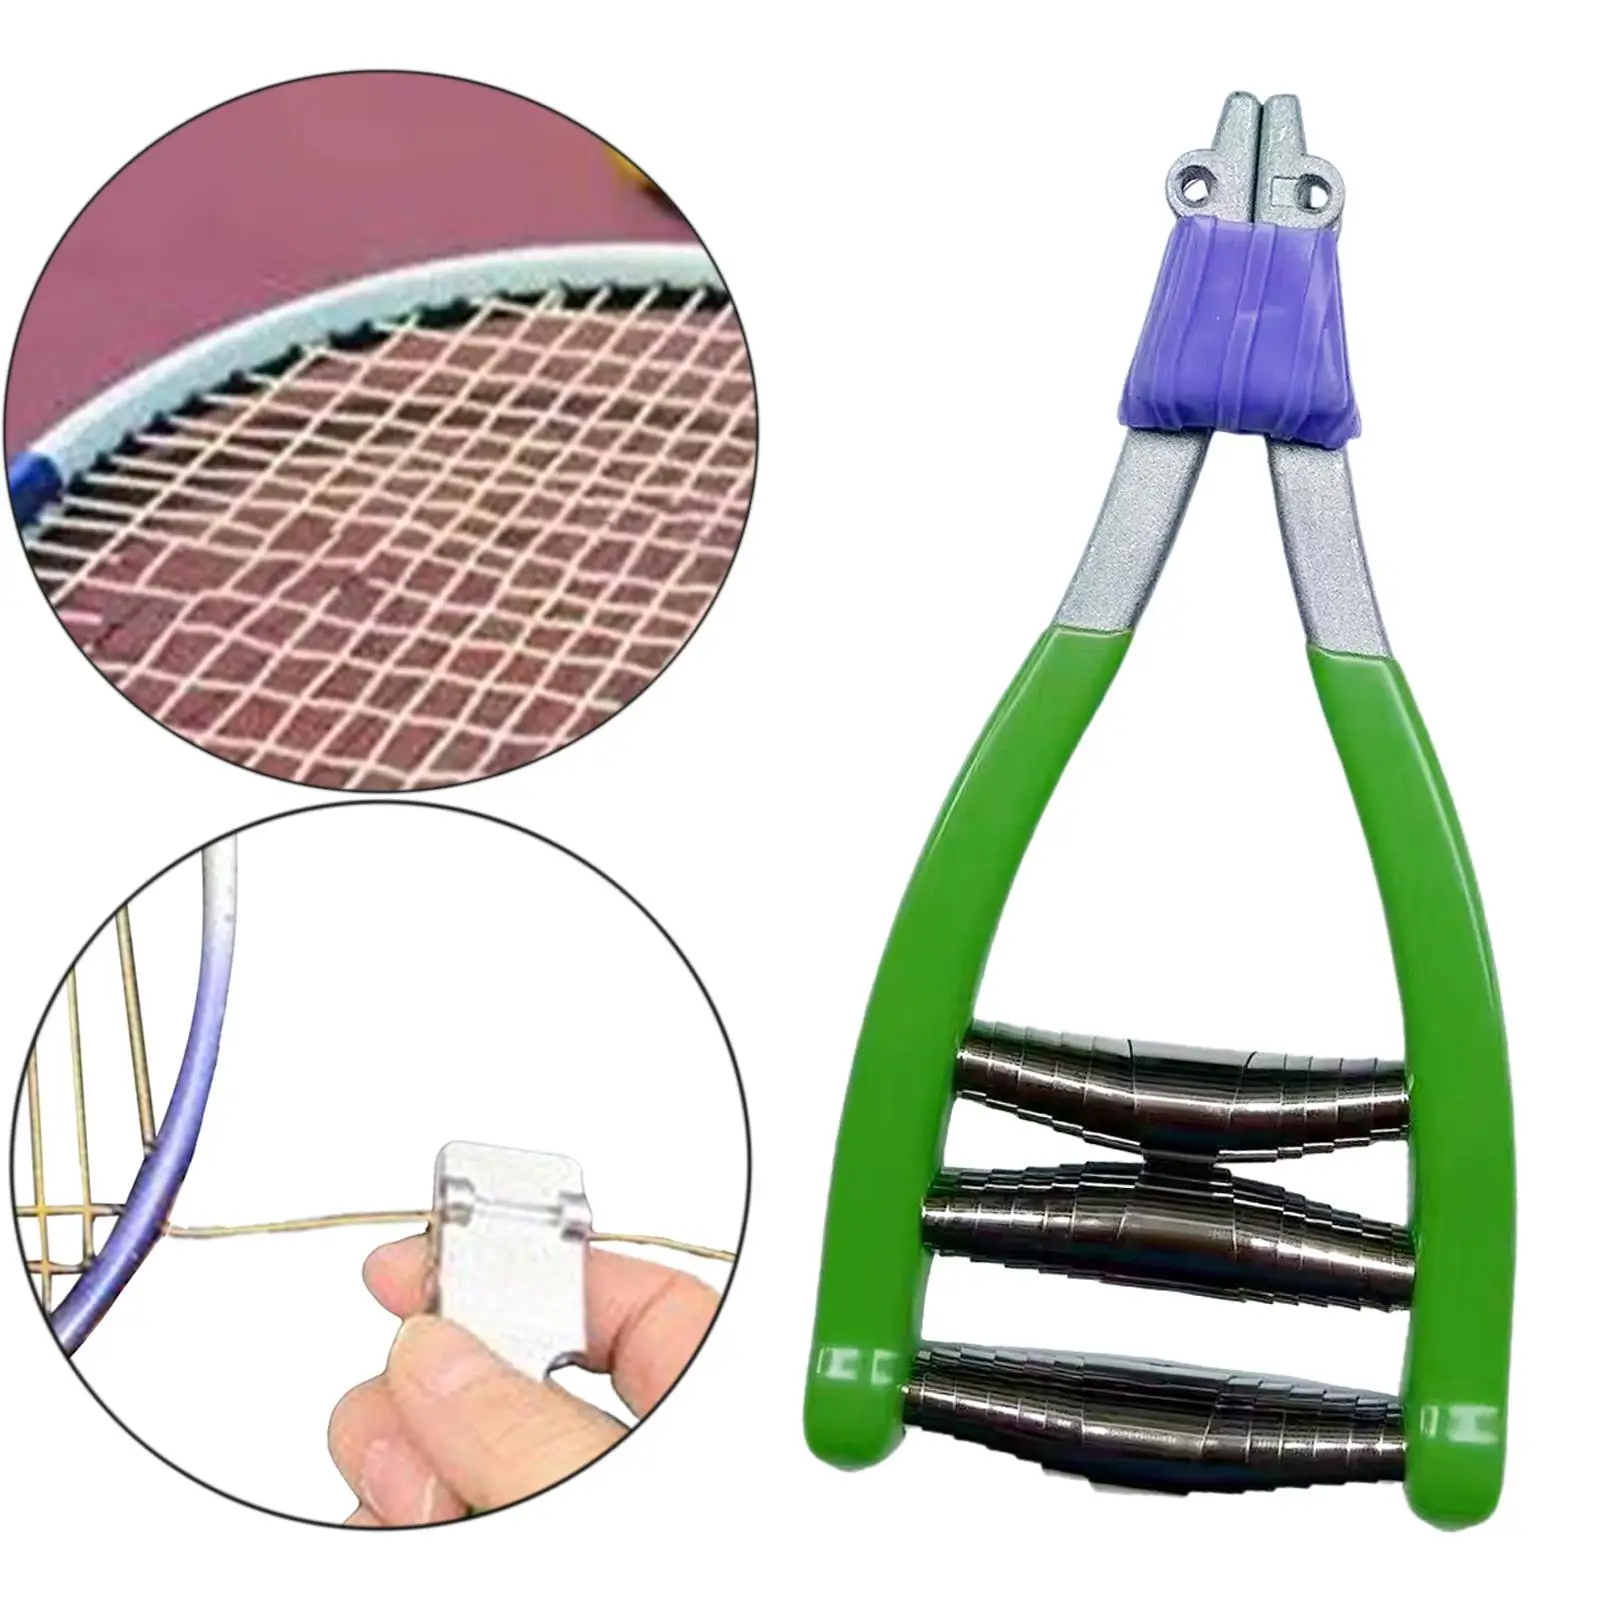 Spring Loaded Starting Clamp Stringing Tool for Tennis Badminton Racket